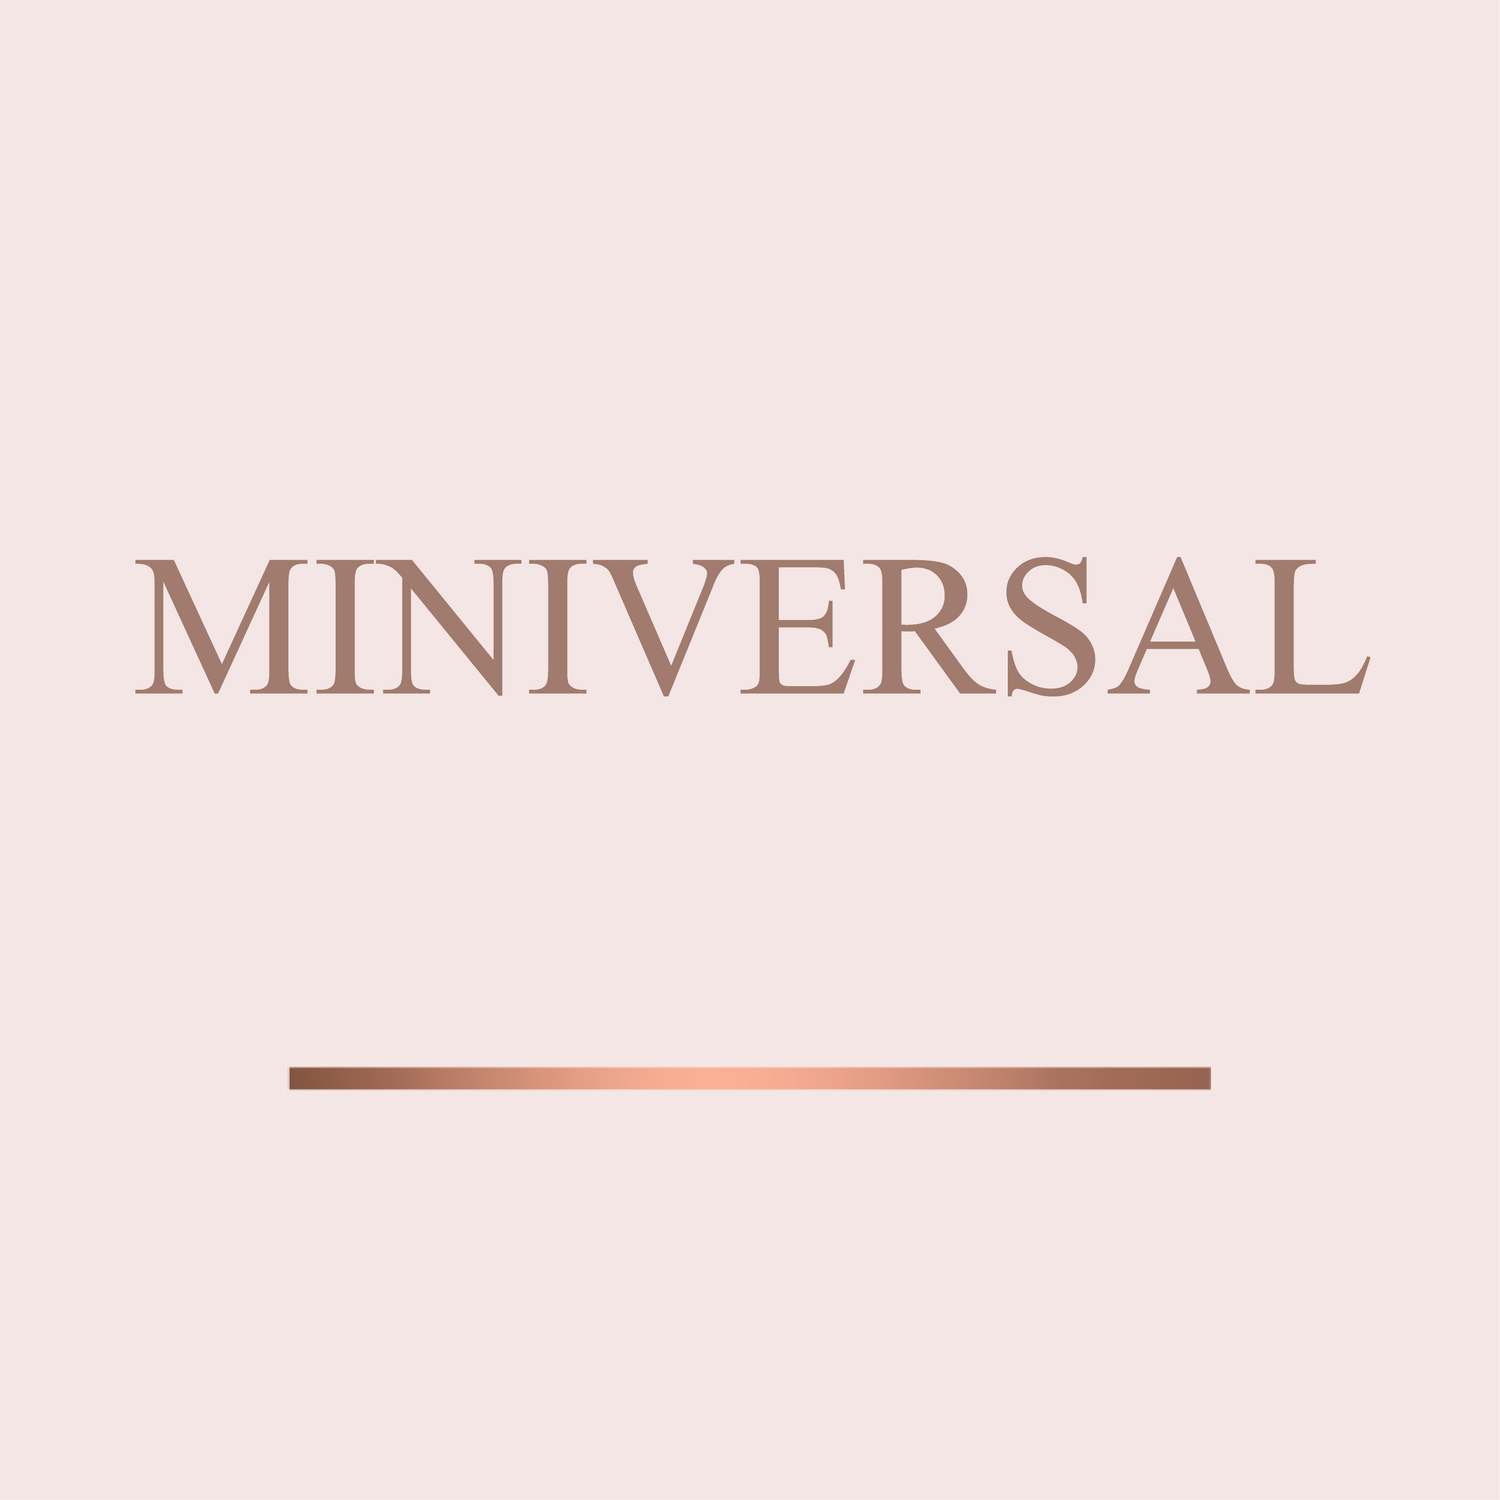 Miniversal